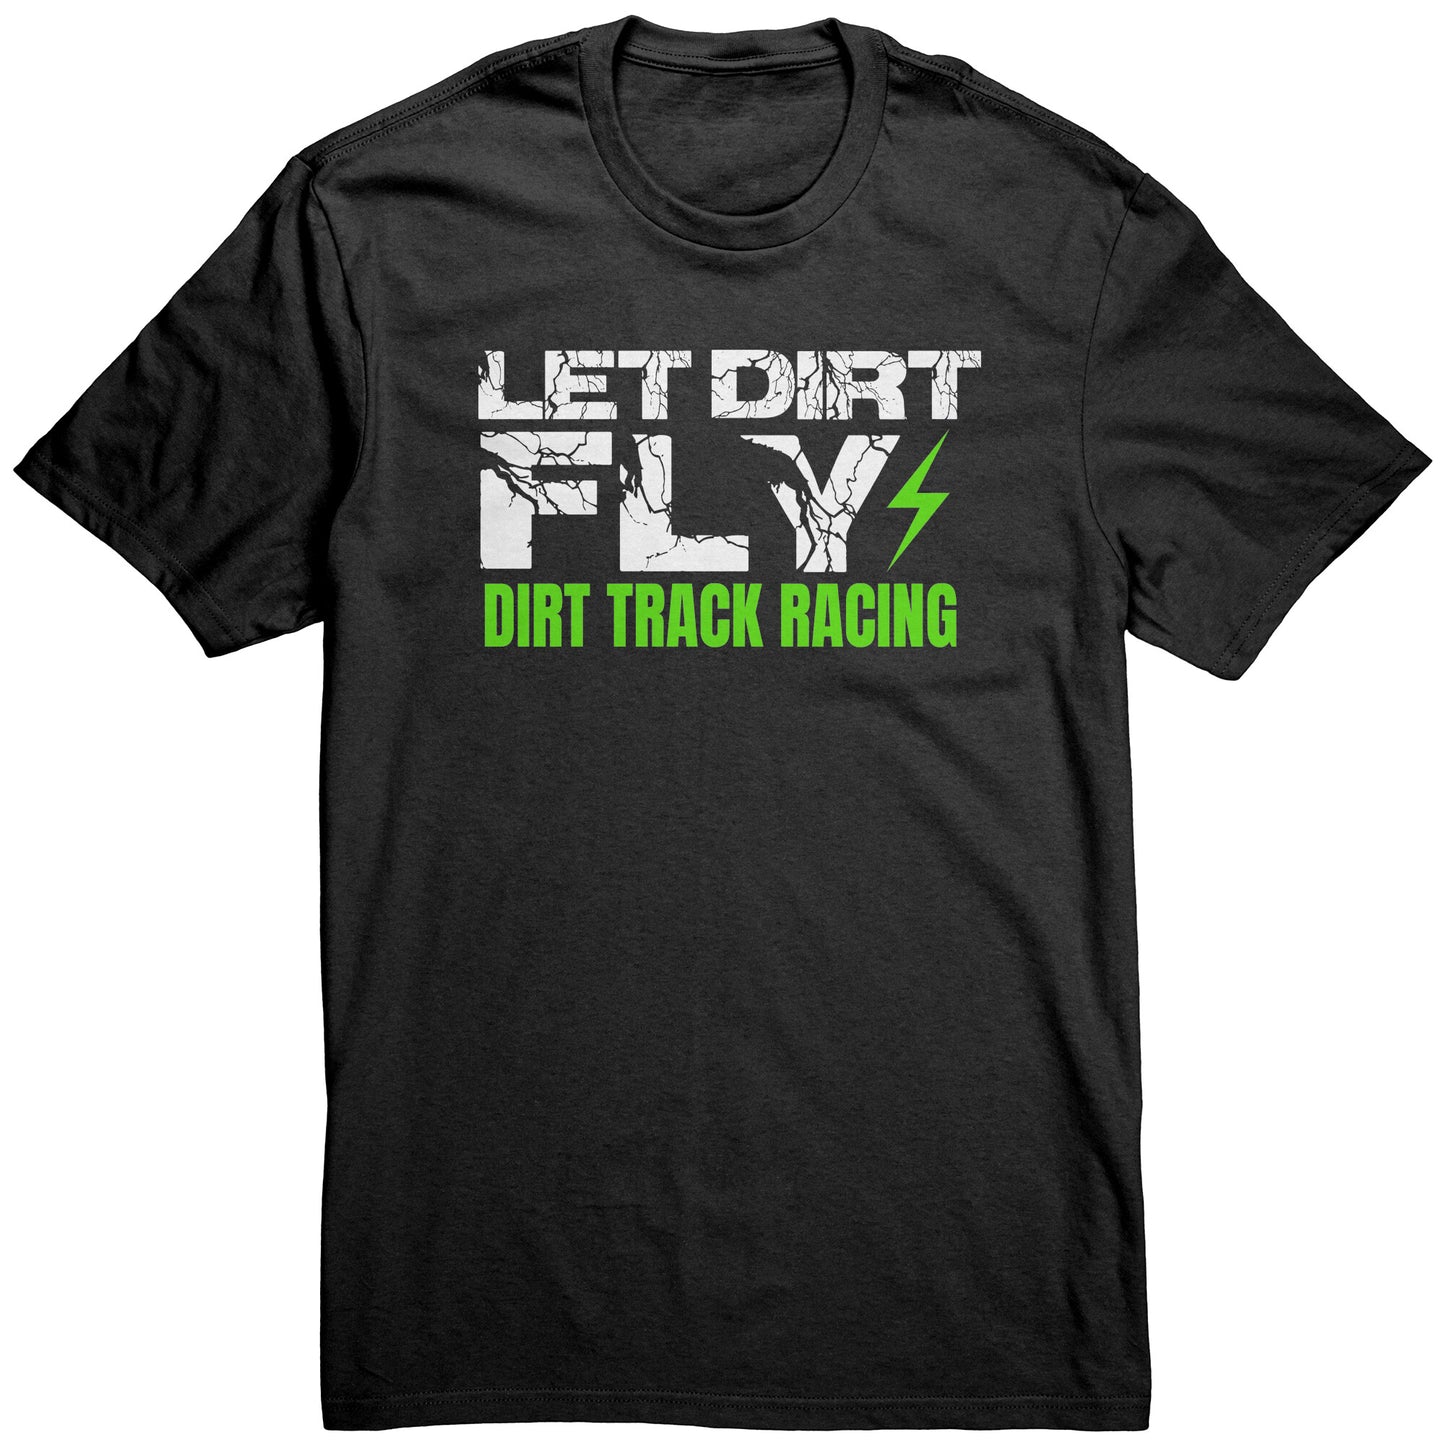 Let Dirt Fly Men's T-Shirt